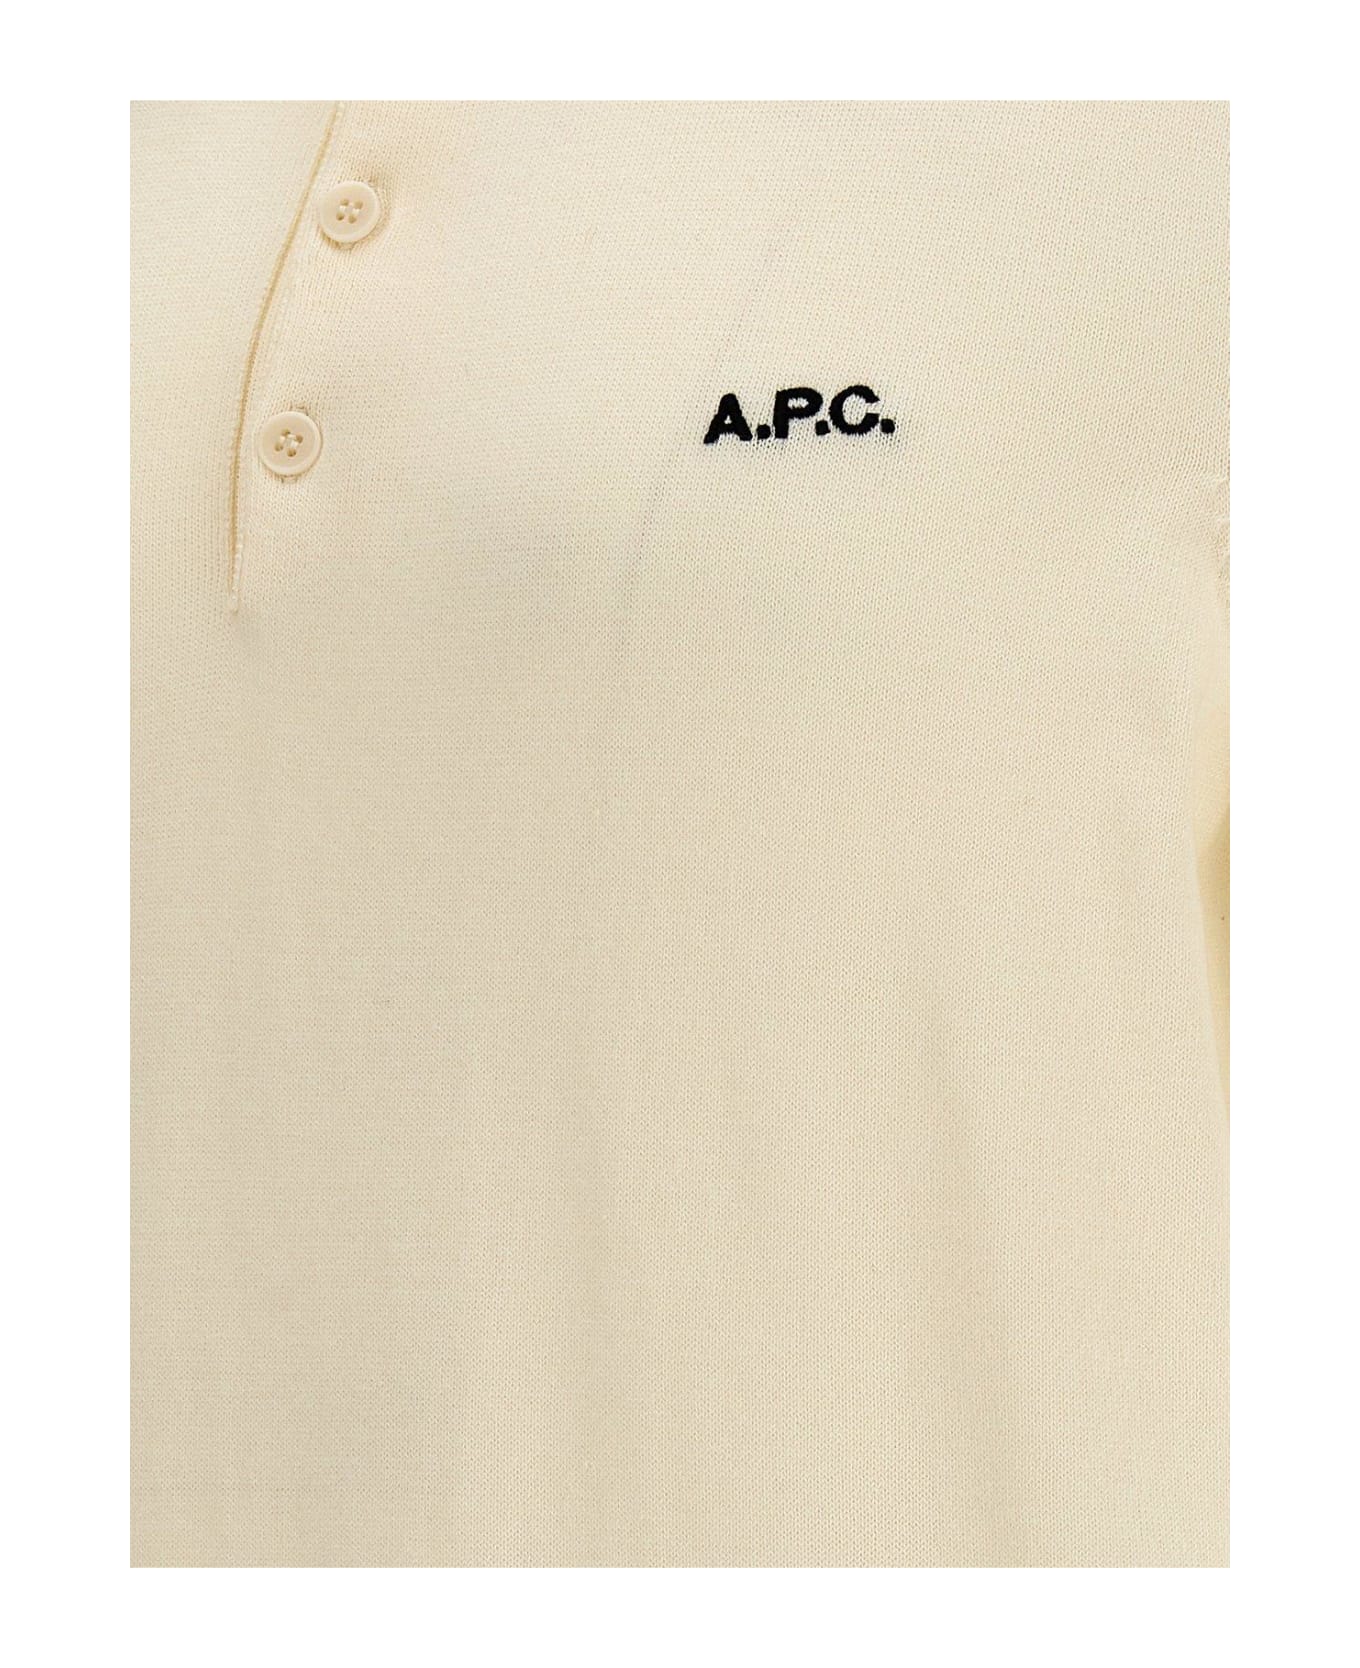 A.P.C. 'flynn' Polo Shirt - Tak Blanc Casse Noir